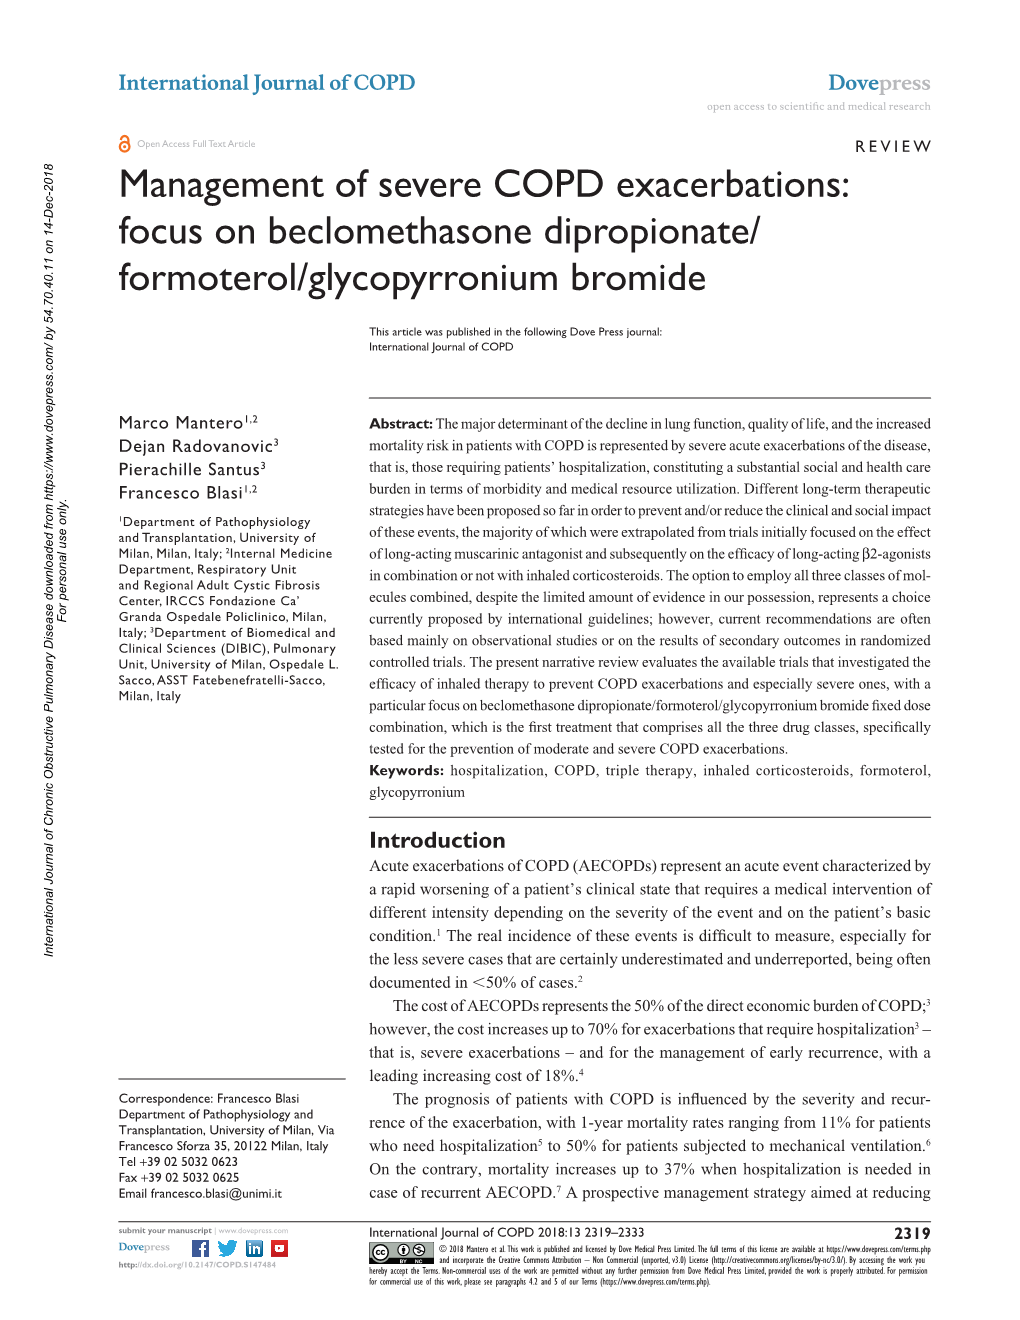 Management of Severe COPD Exacerbations: Focus on Beclomethasone Dipropionate/ Formoterol/Glycopyrronium Bromide